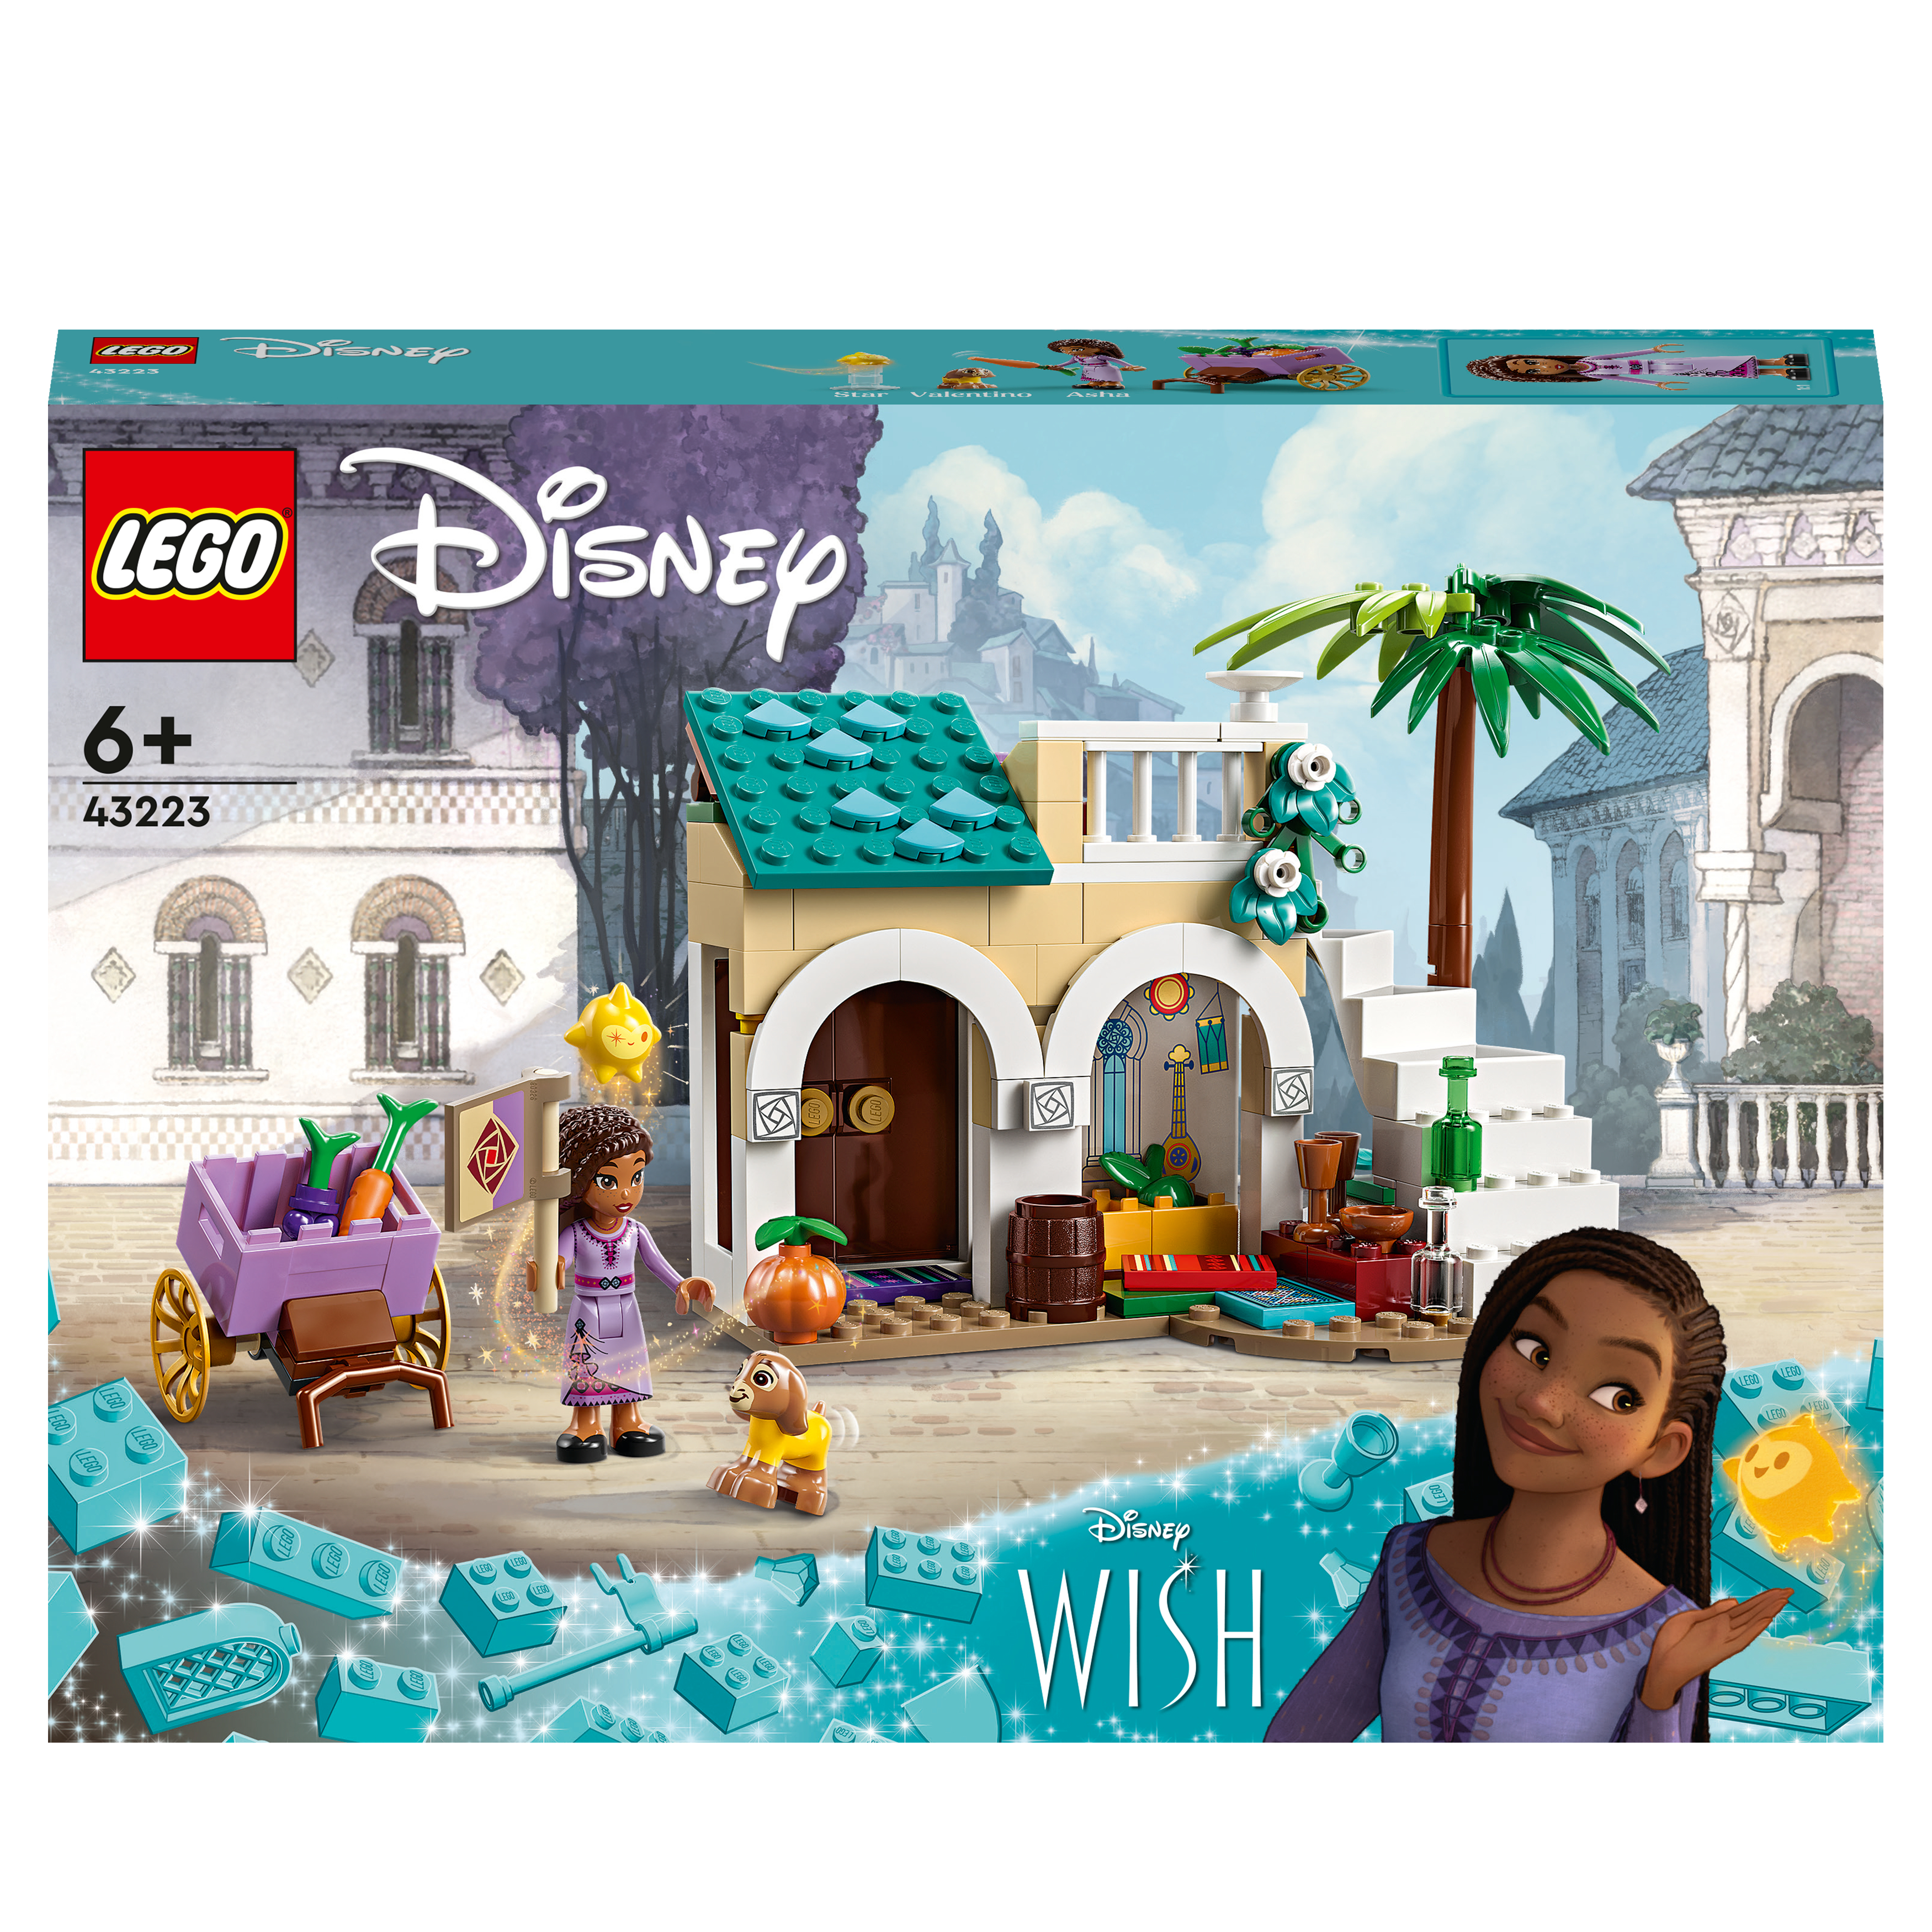 Mehrfarbig in Rosas Disney der Stadt LEGO Asha 43223 Bausatz,